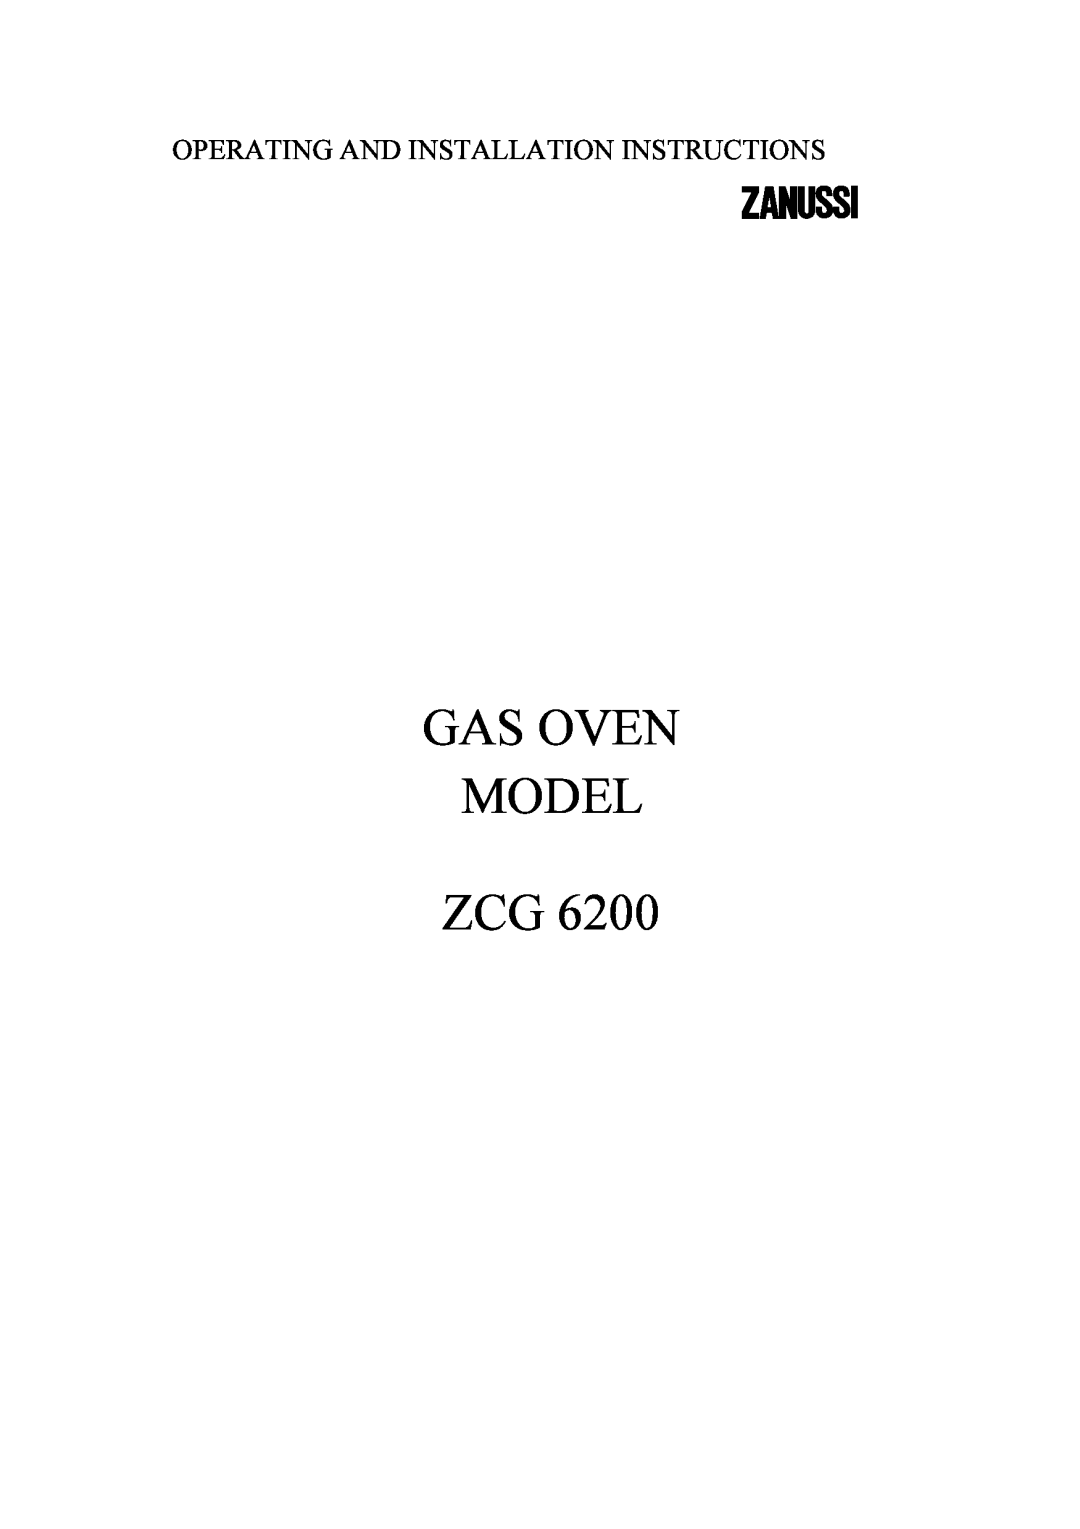 Zanussi ZCG 6200 installation instructions Gas Oven Model Zcg, Operating And Installation Instructions 